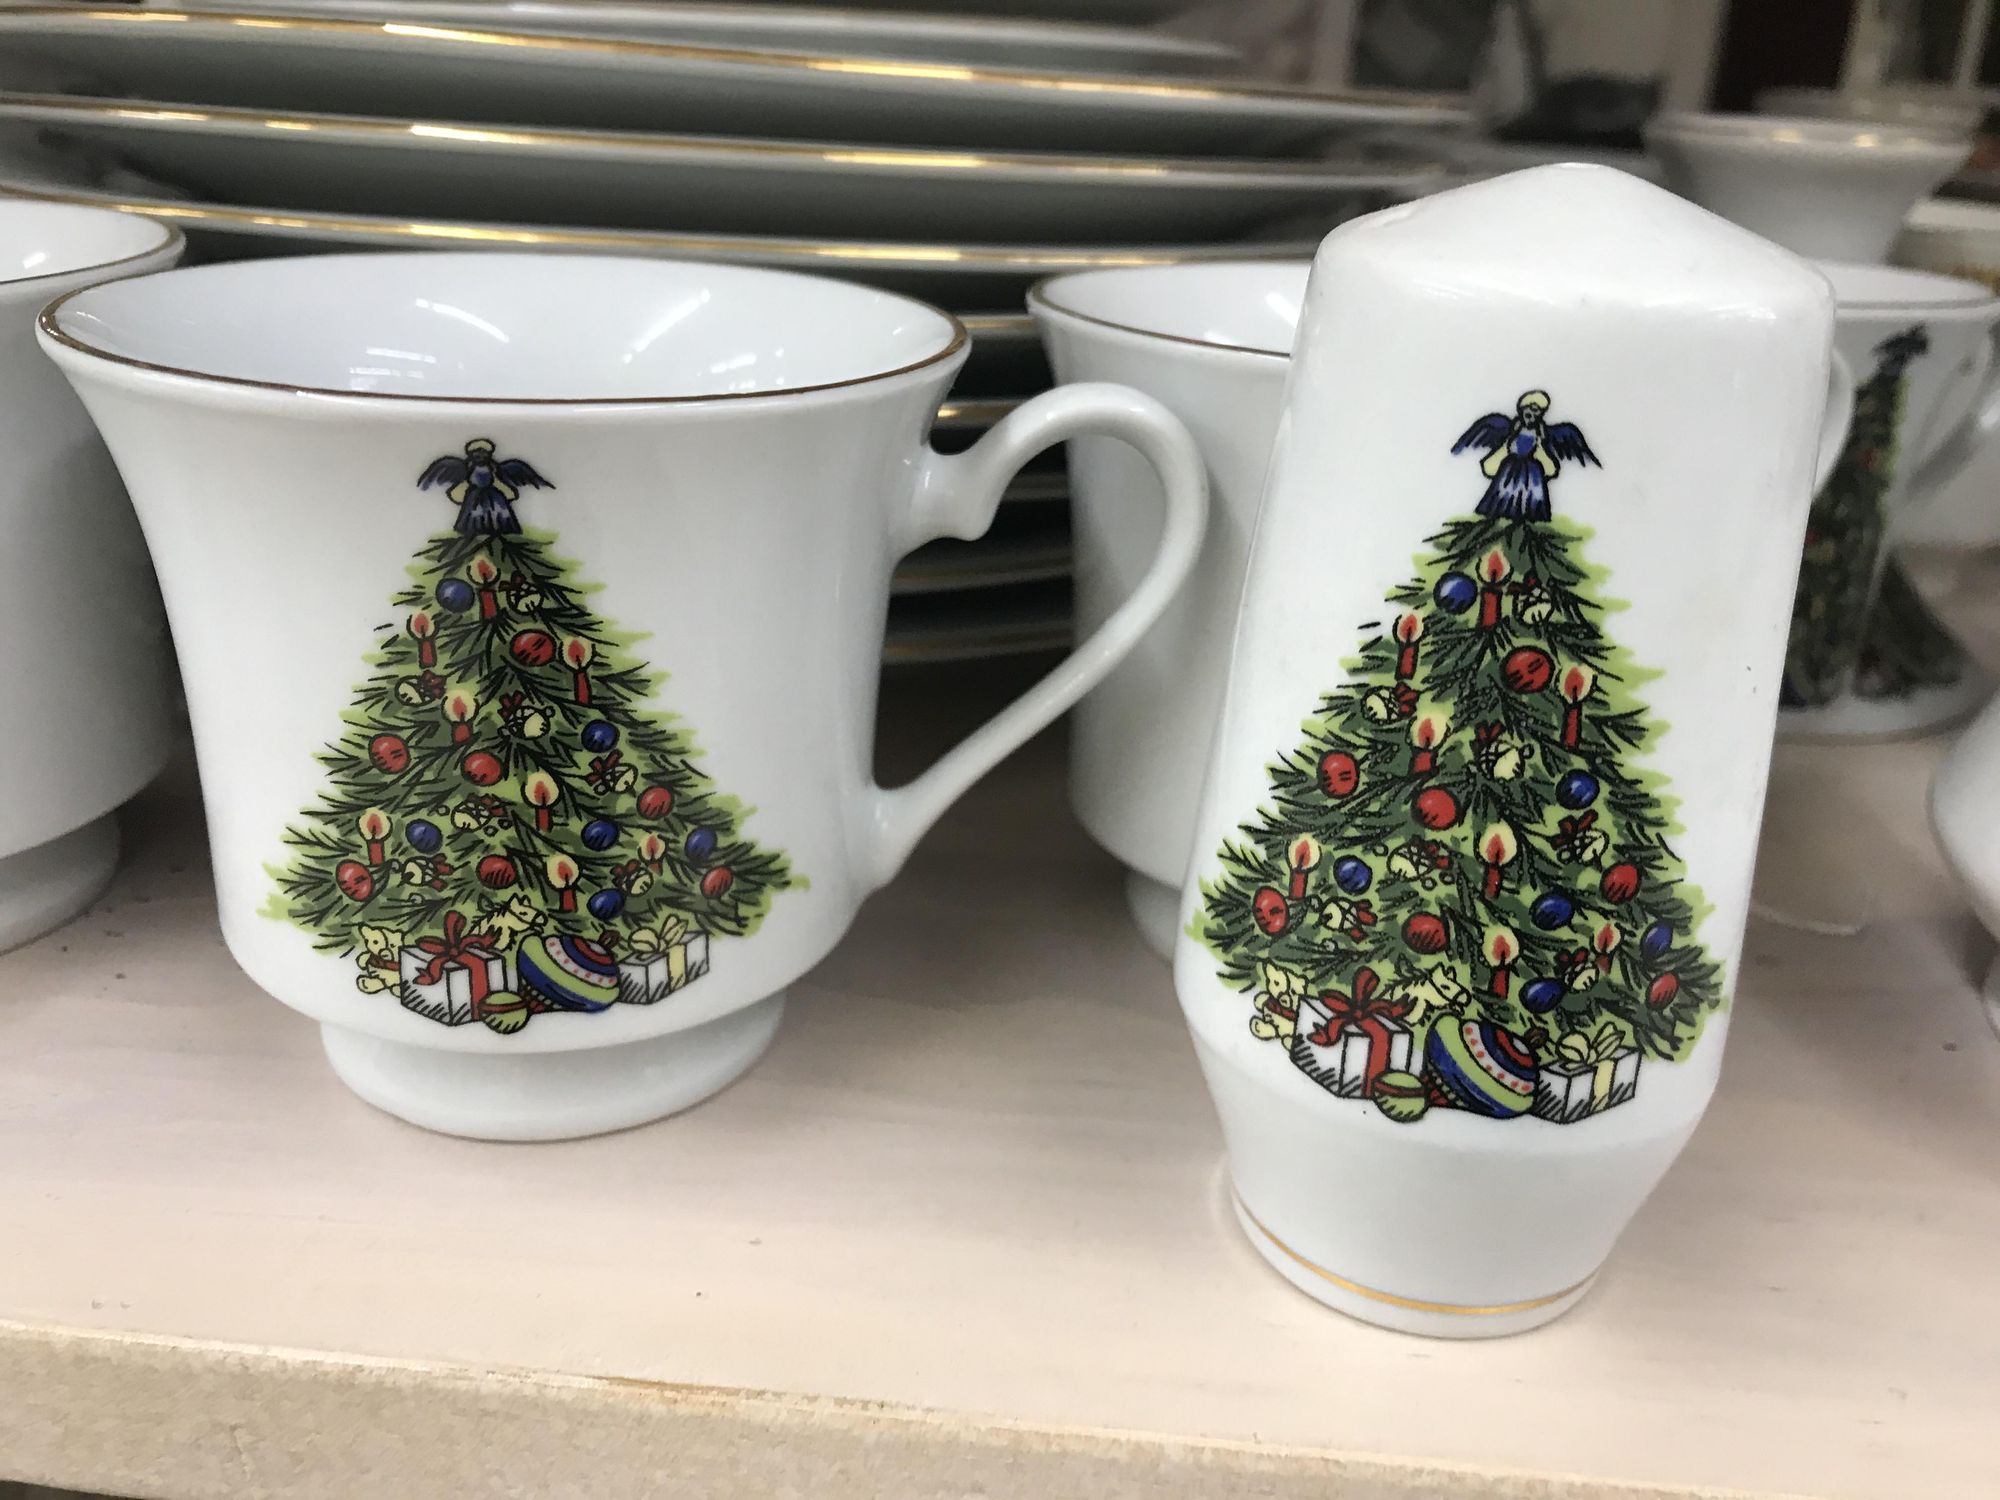 White coffee mug and salt shaker with Christmas trees on it.